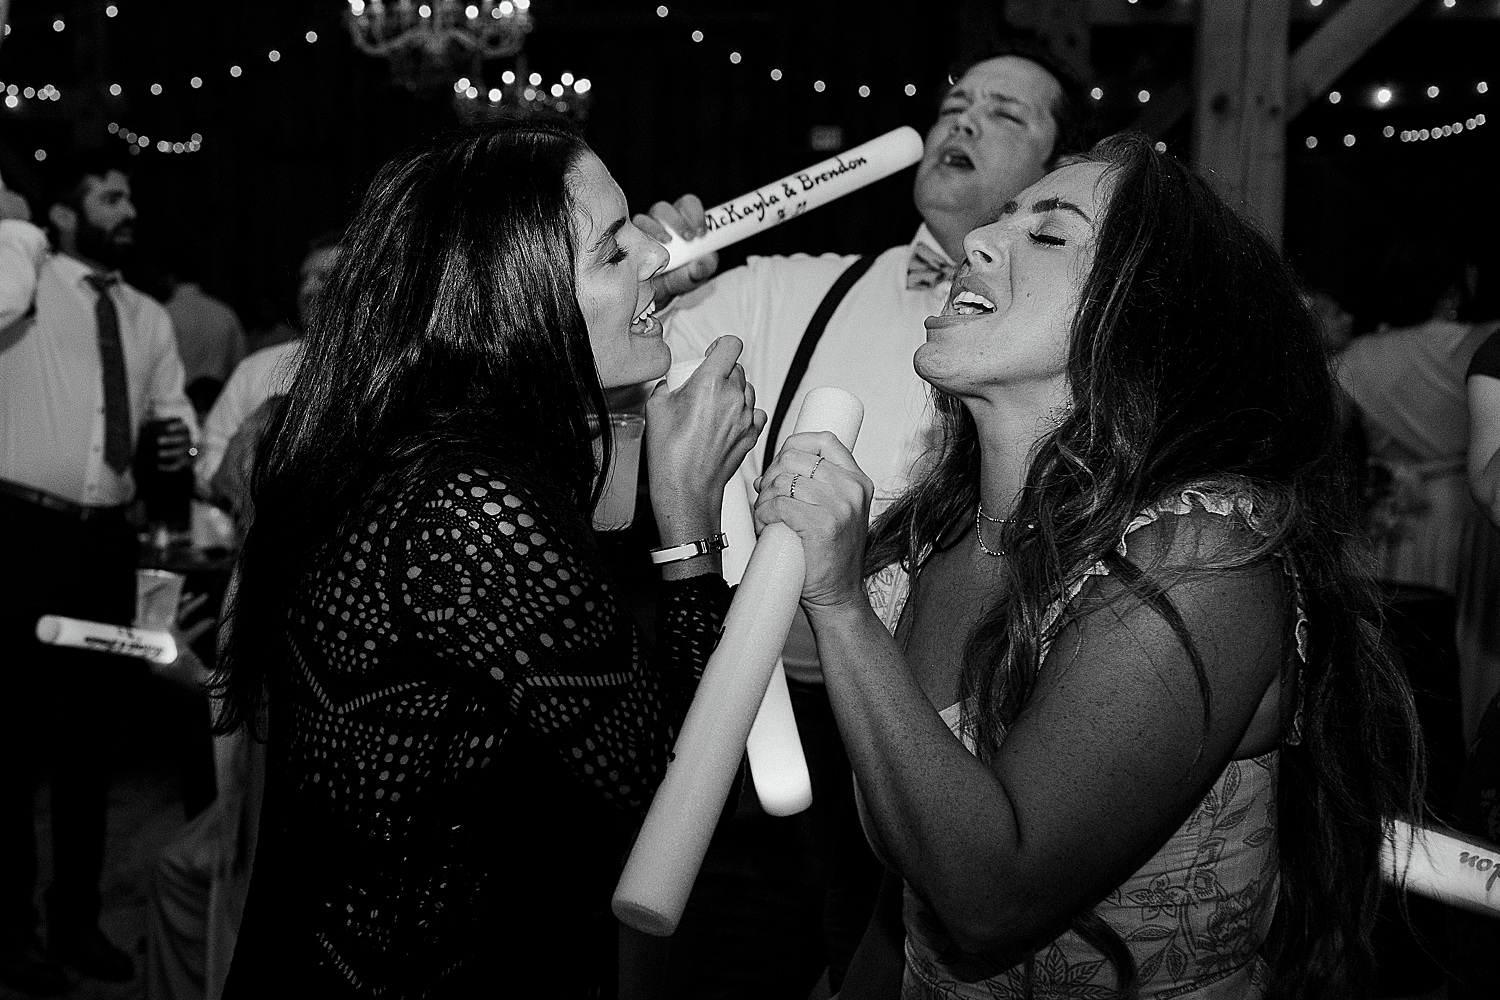 women using glow sticks as microphones at Maine wedding